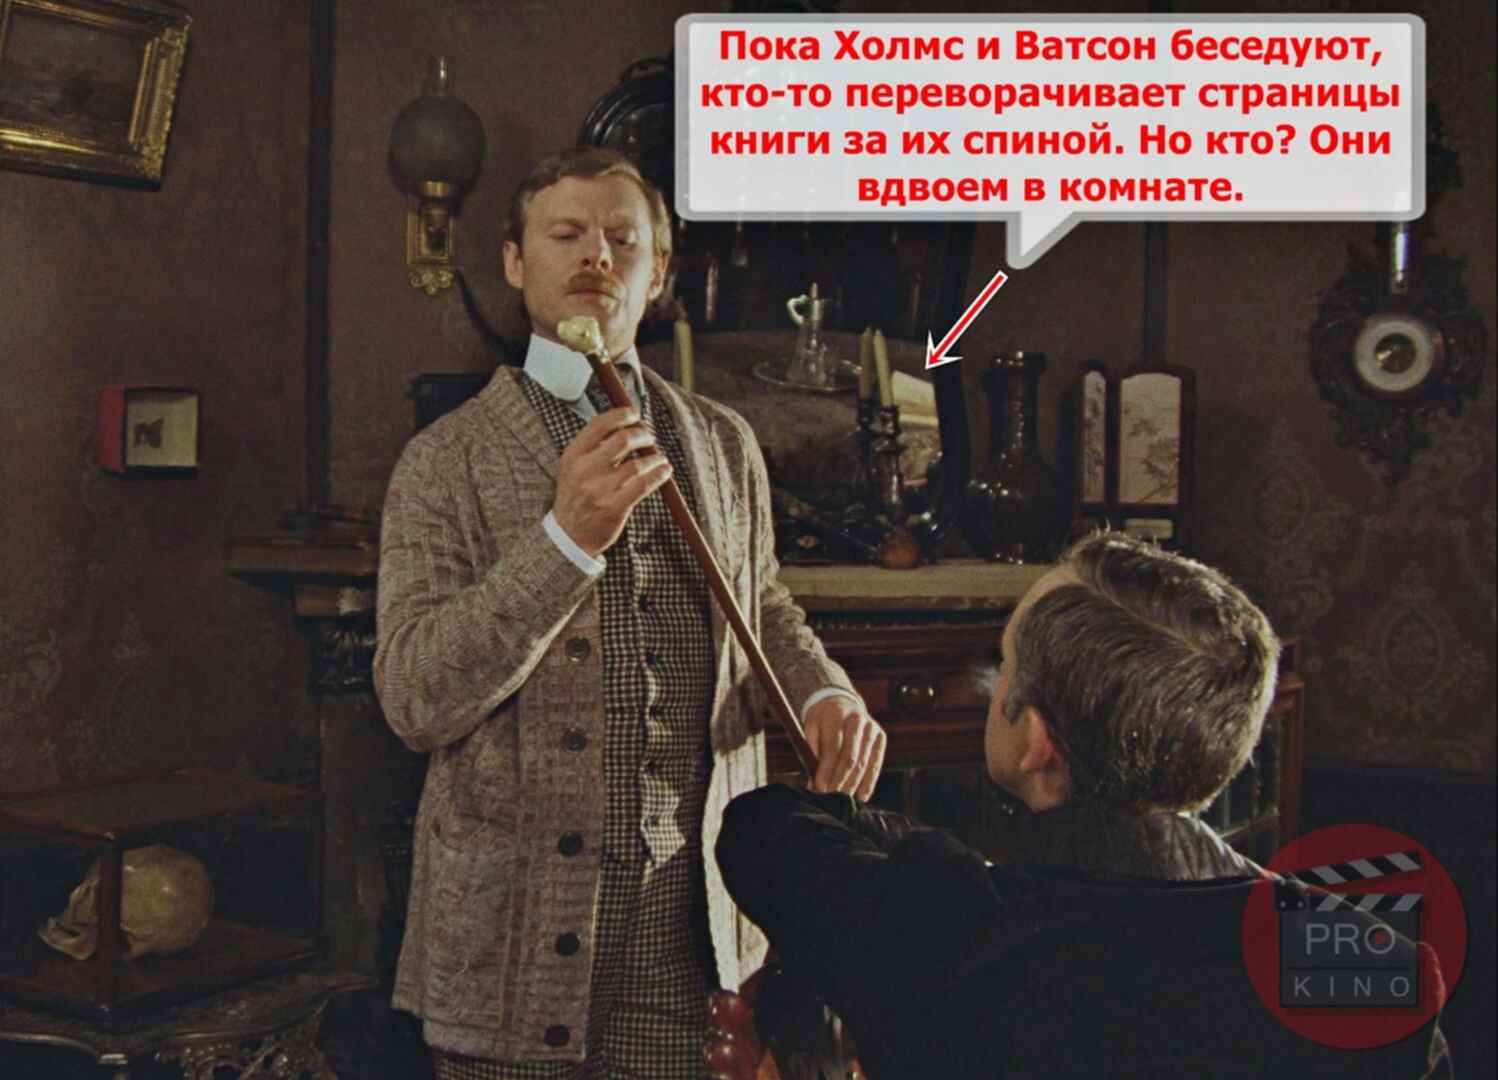 Приключения Шерлока Холмса Знакомство